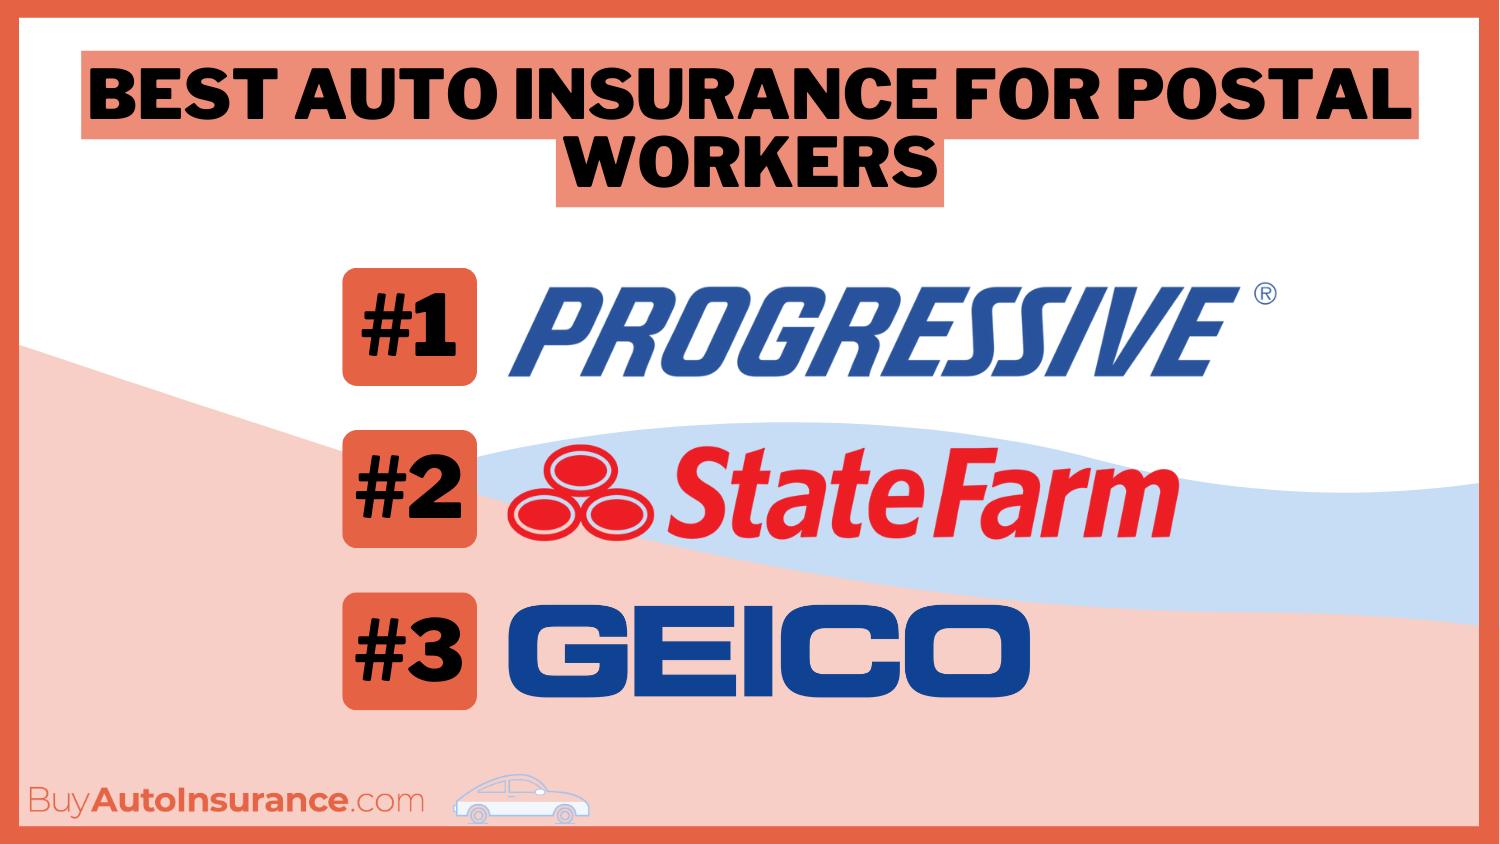 best auto insurance for postal workers: Progressive, State Farm, Geico